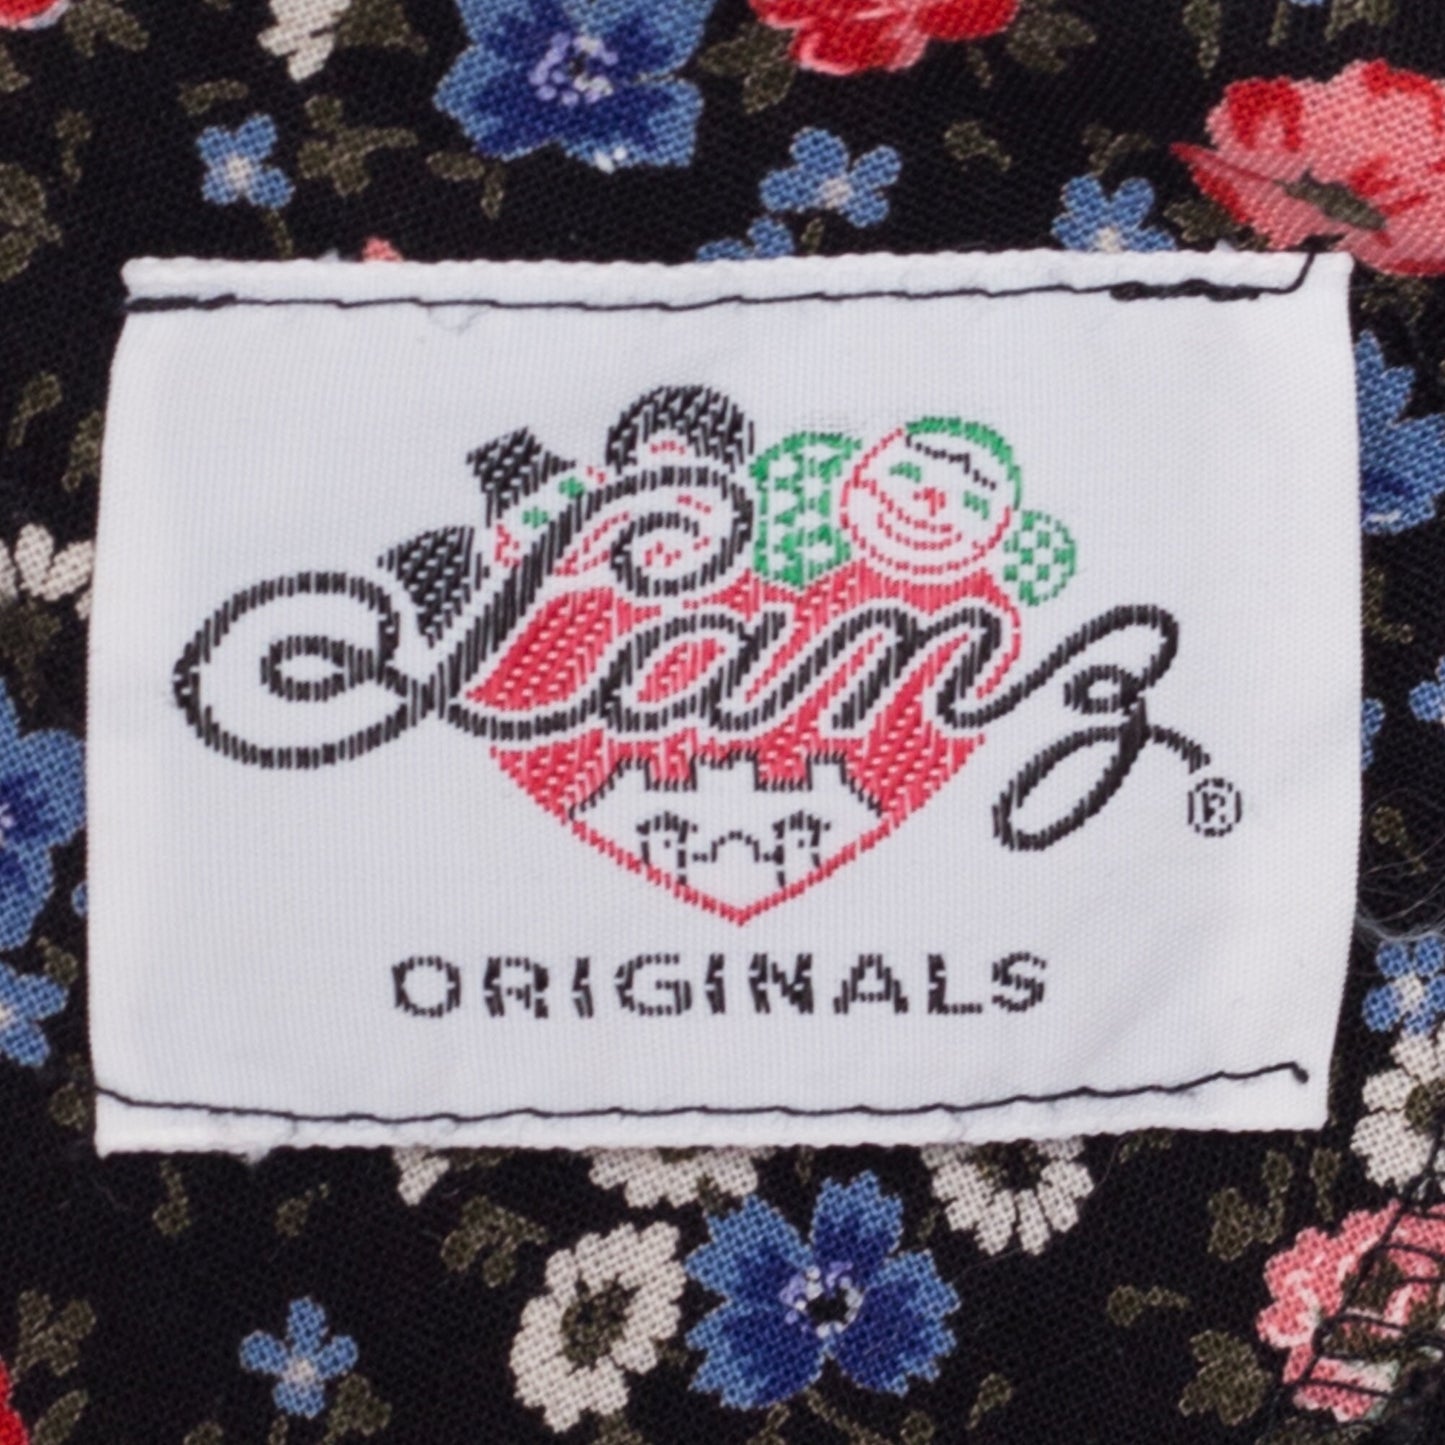 S| 80s Lanz Originals Floral Puff Sleeve Midi Dress - Small | Vintage Lace V Neck Low Back Fit & Flare Pocket Dress